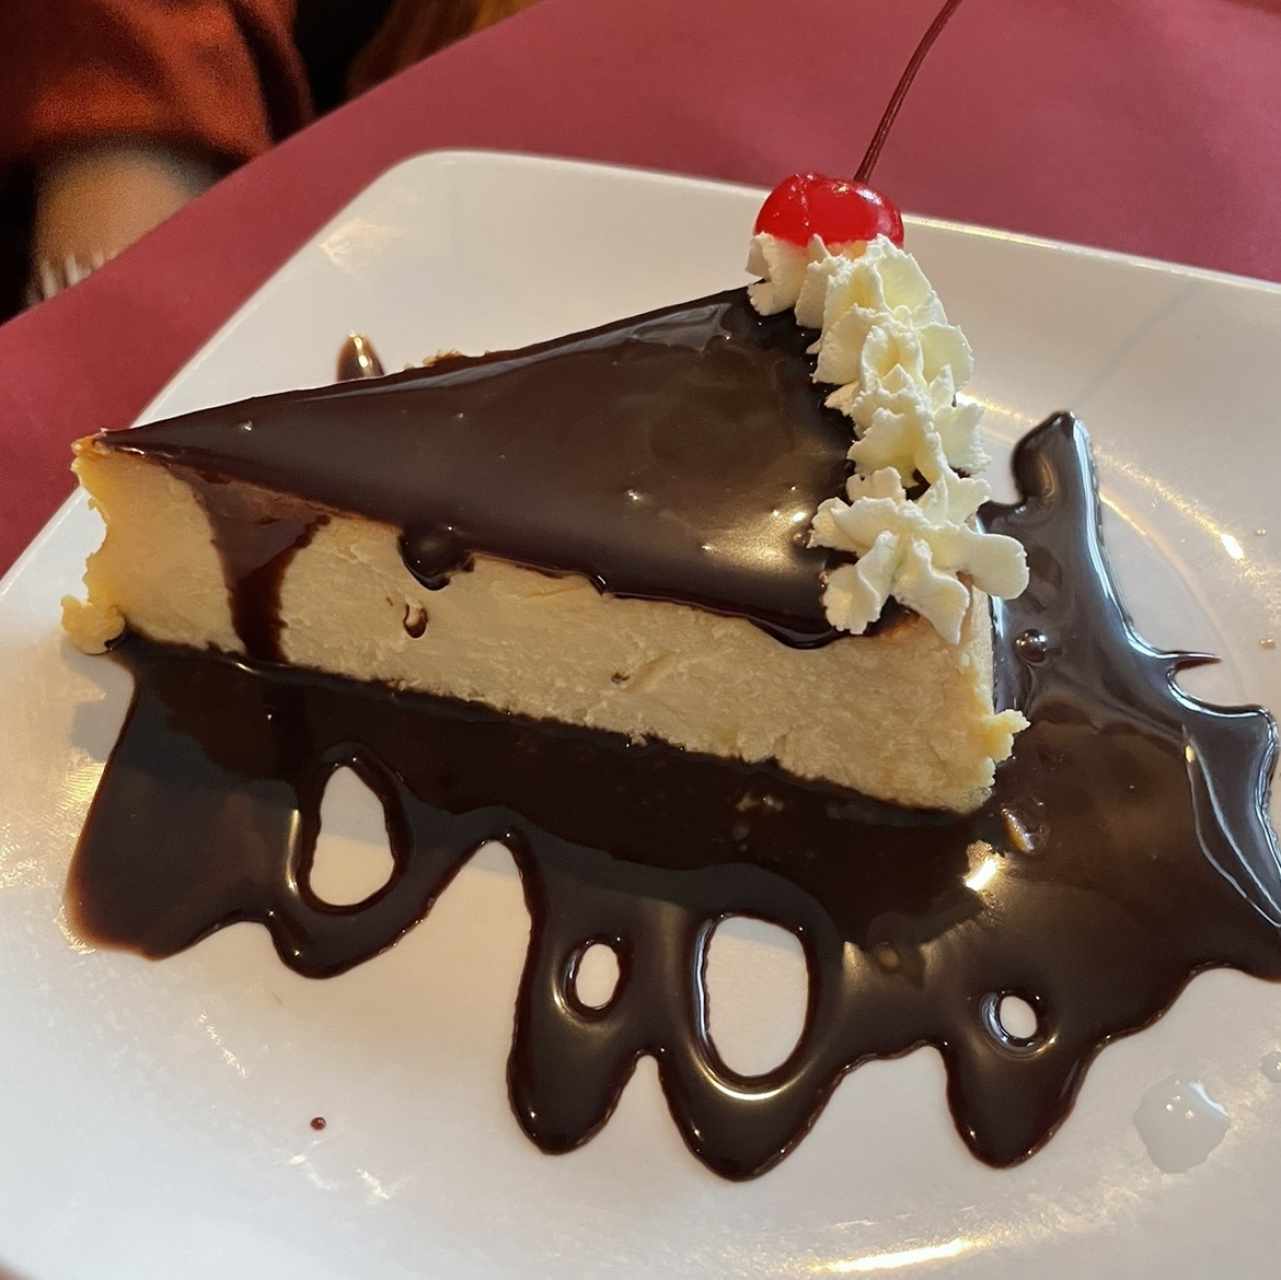 Cheesecake de chocolate